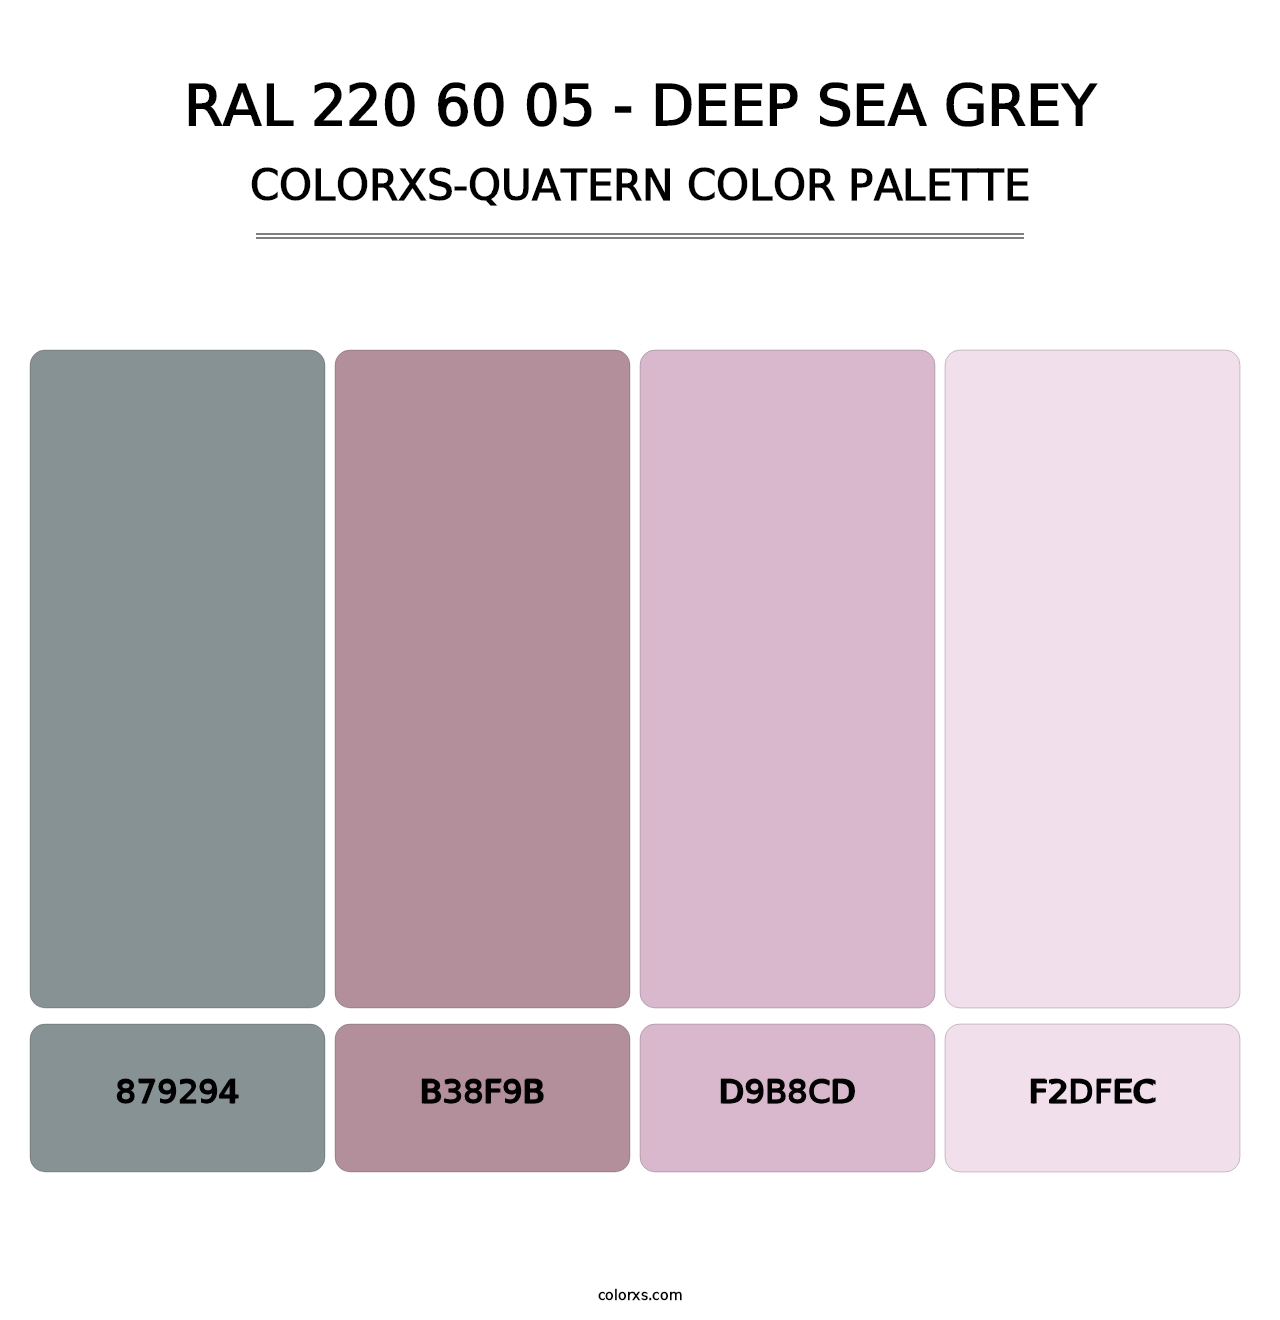 RAL 220 60 05 - Deep Sea Grey - Colorxs Quatern Palette